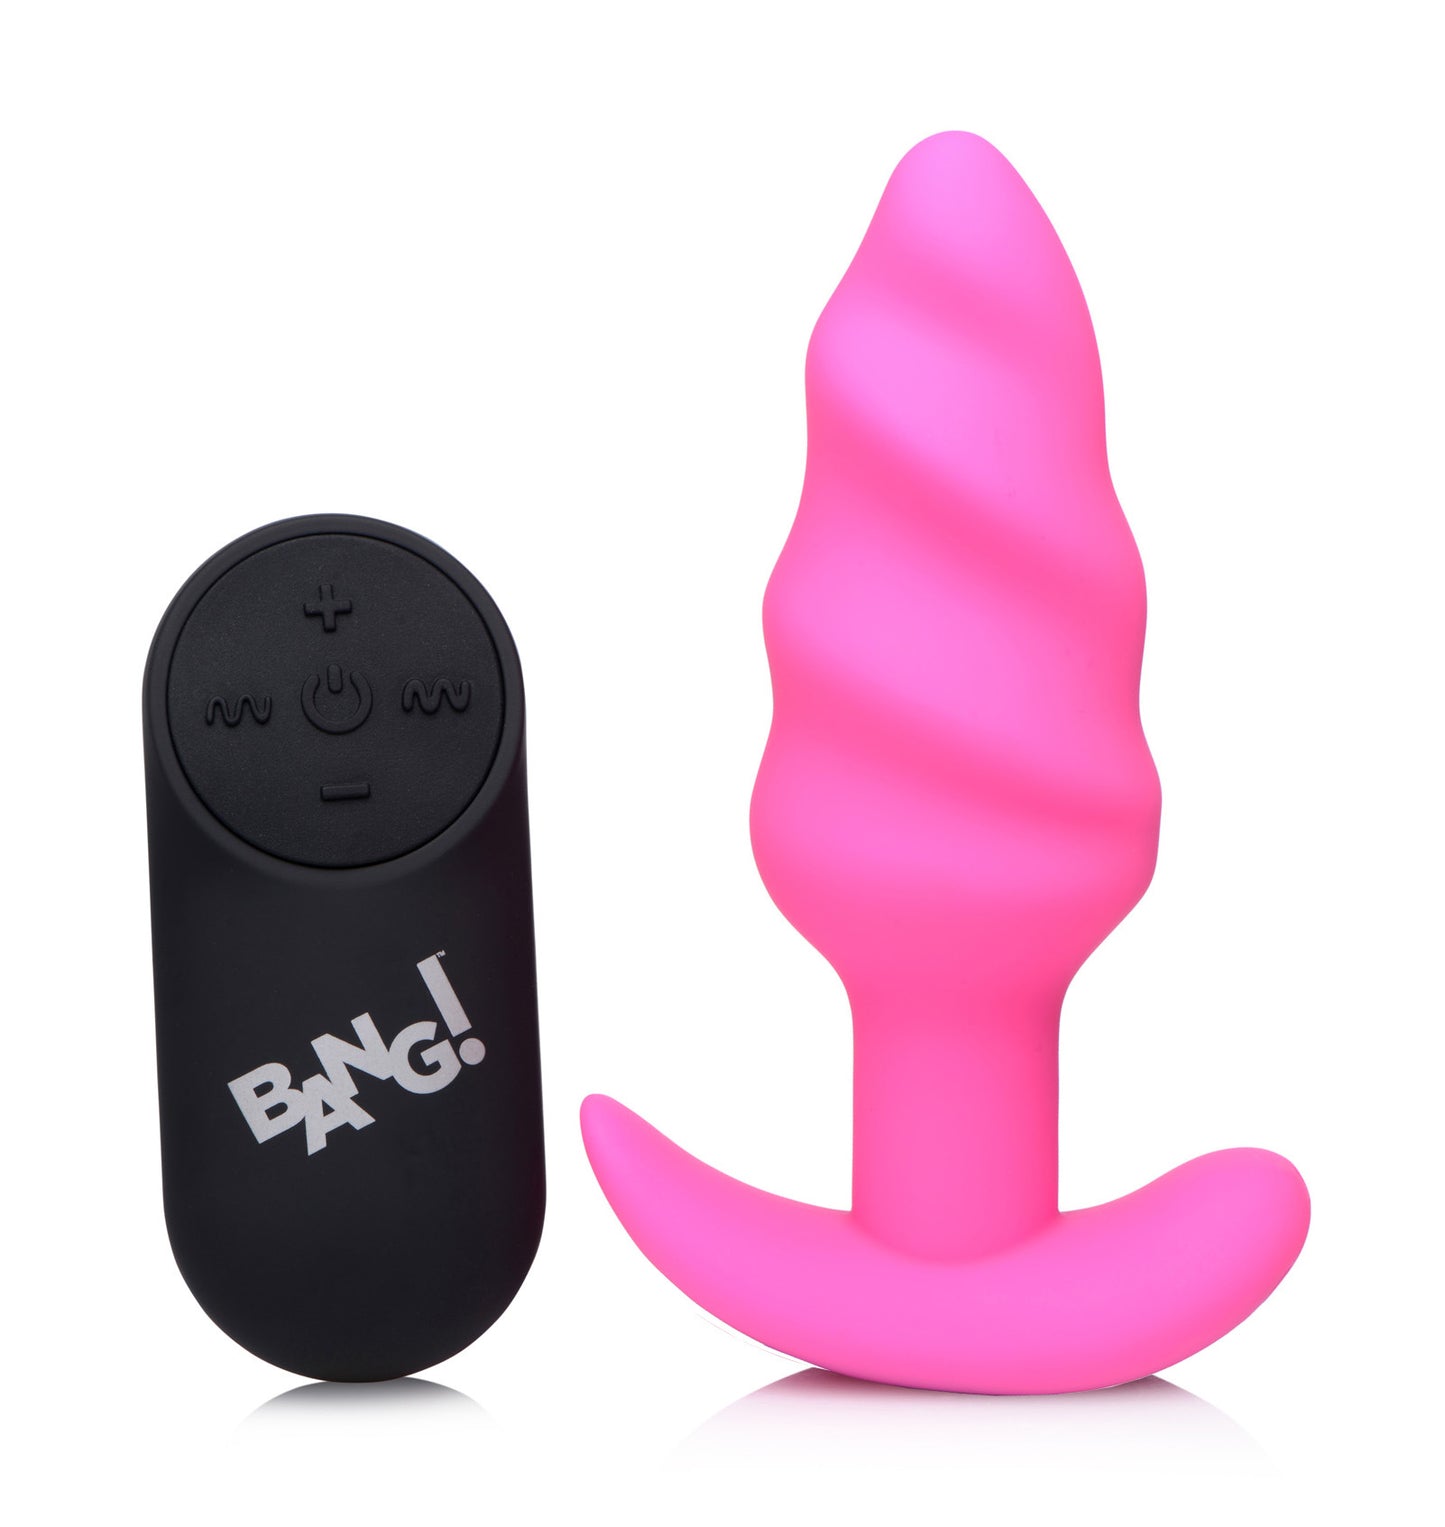 Remote Control 21X Vibrating Silicone Swirl Butt Plug - Pink - UABDSM